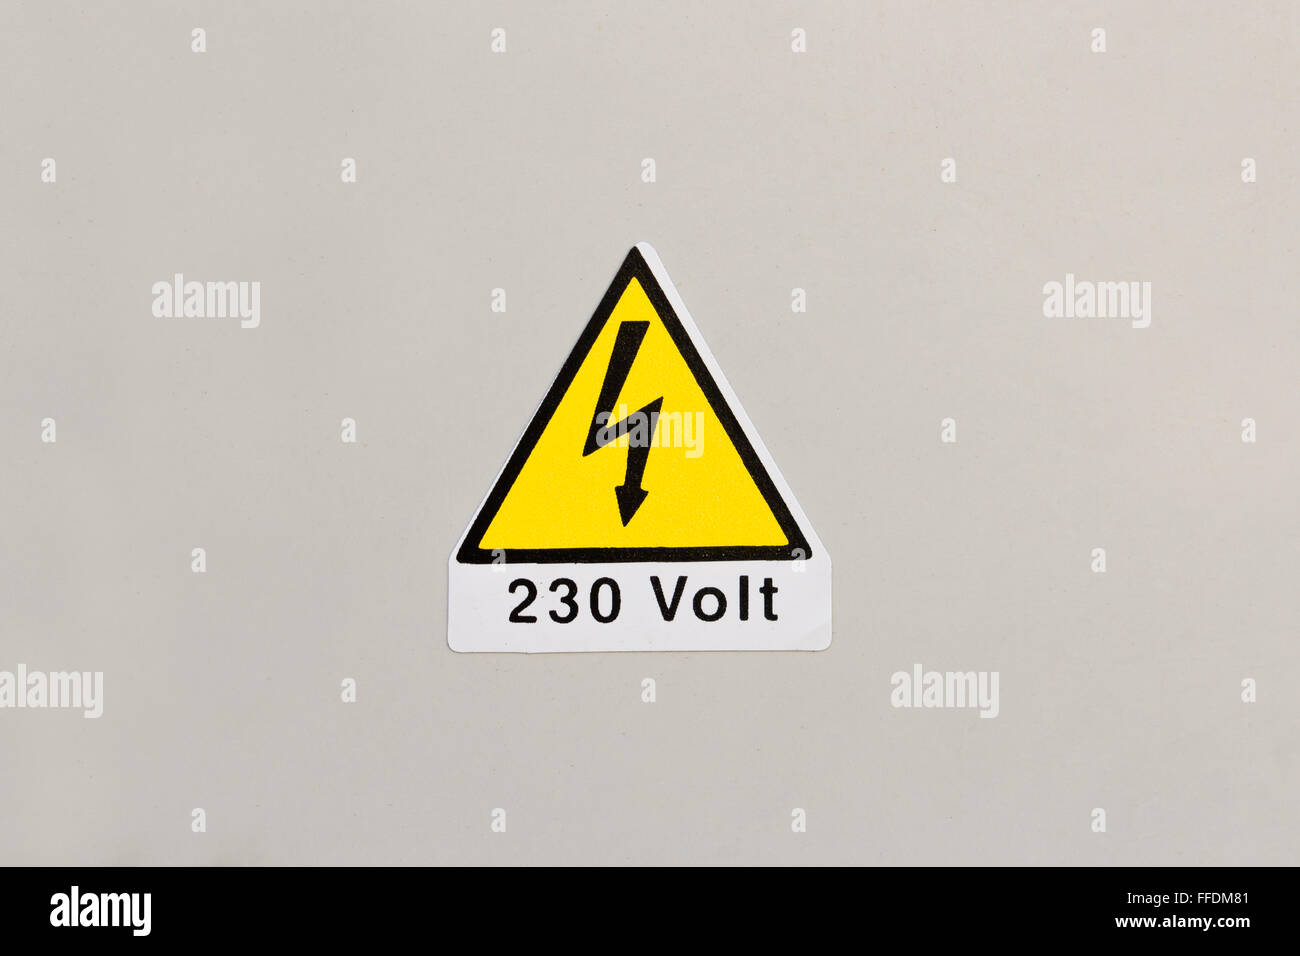 High voltage sign 230 Volt Stock Photo